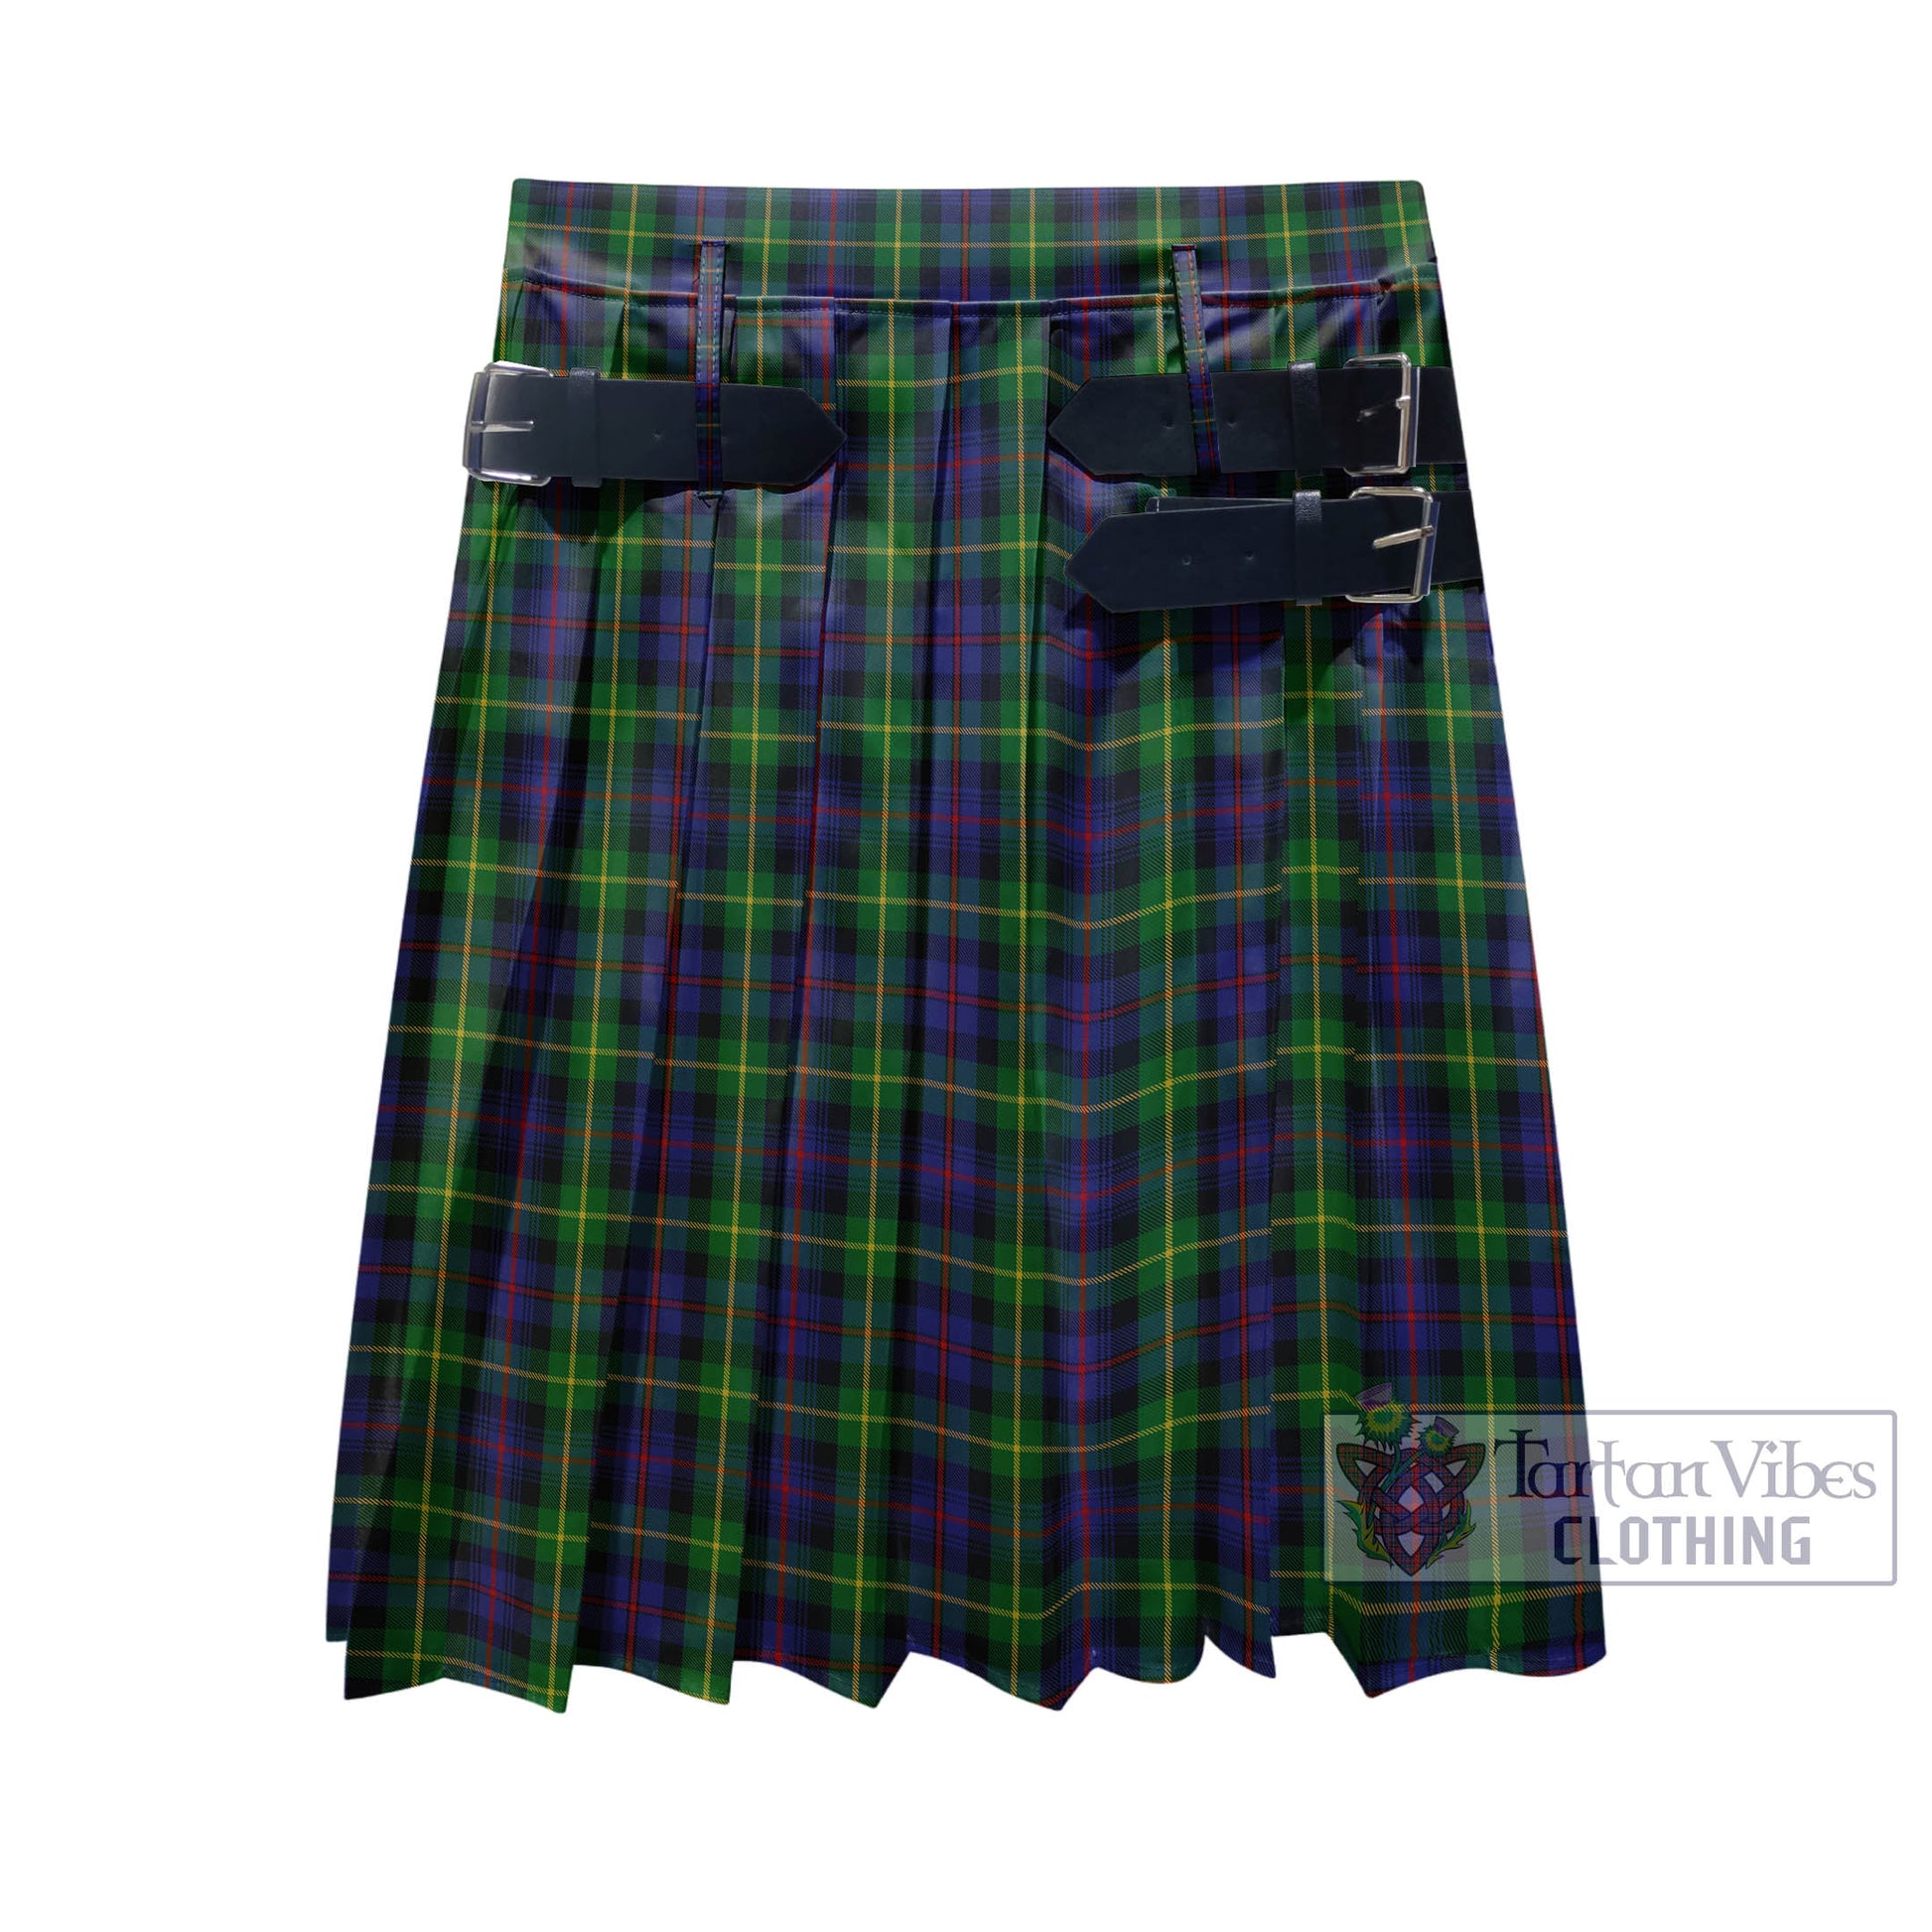 Tartan Vibes Clothing Farquharson Tartan Men's Pleated Skirt - Fashion Casual Retro Scottish Style